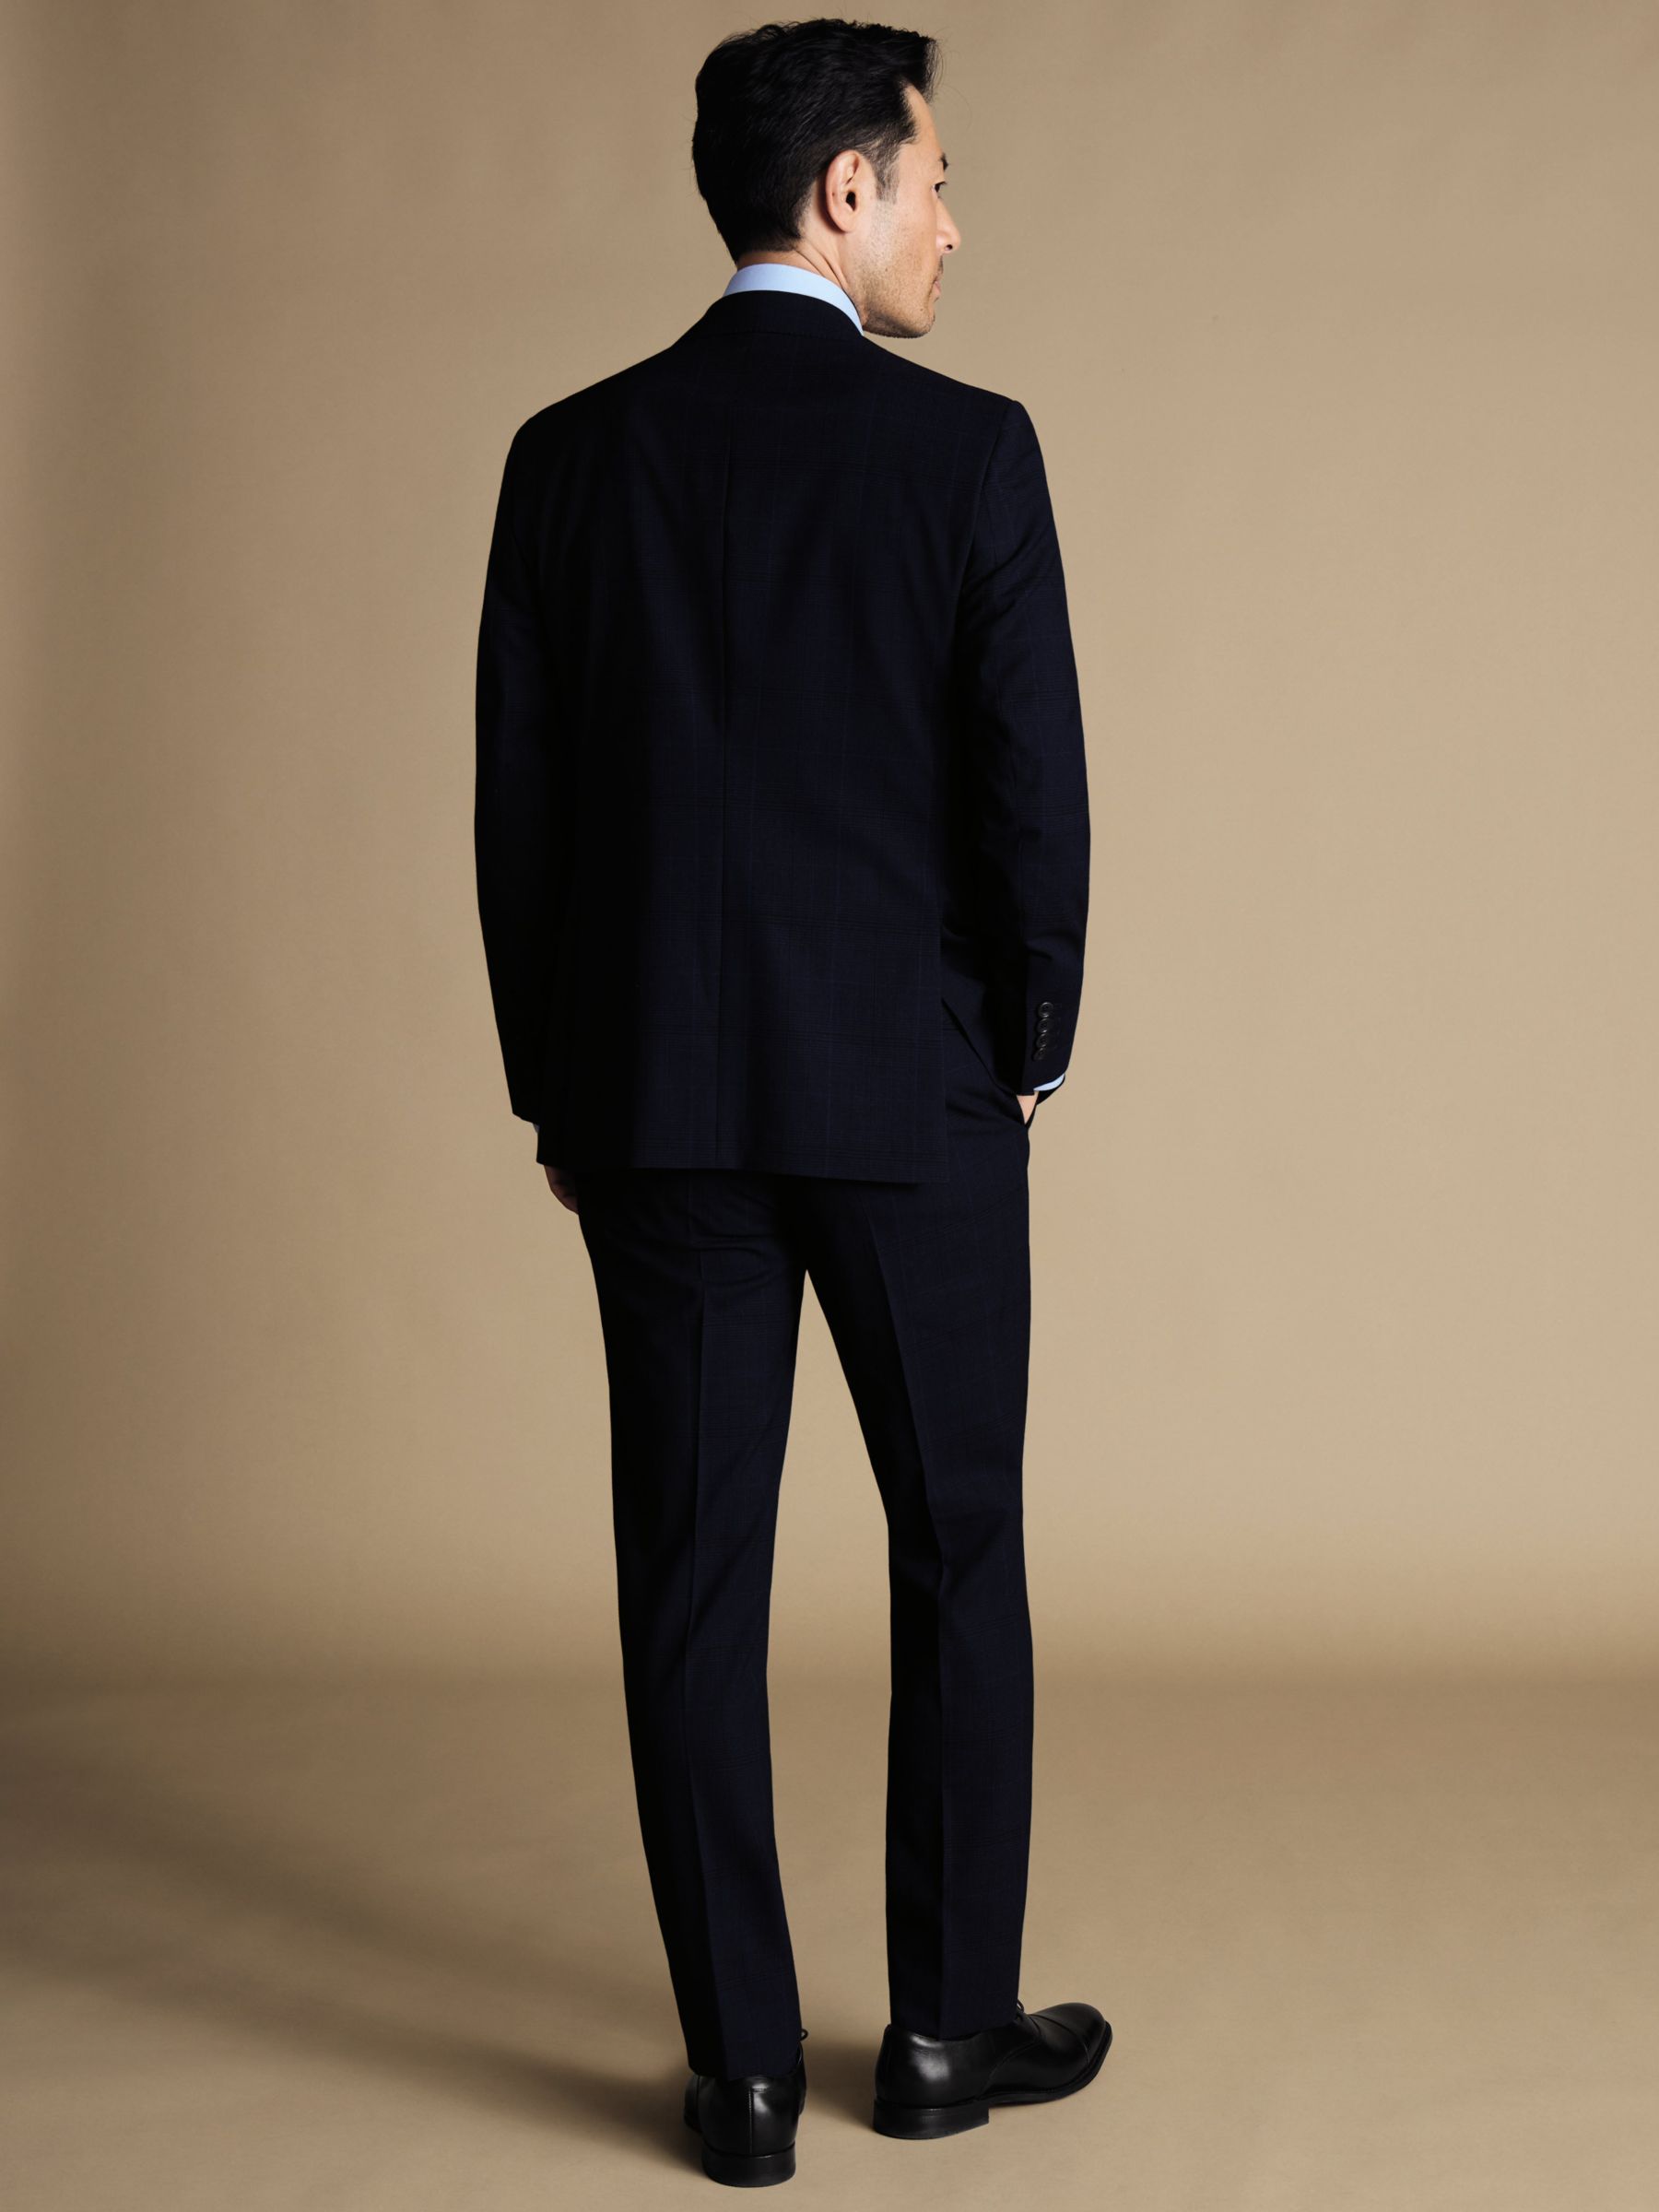 Charles Tyrwhitt Prince of Wales Slim Fit Ultimate Performance Suit Jacket, Navy, 36R